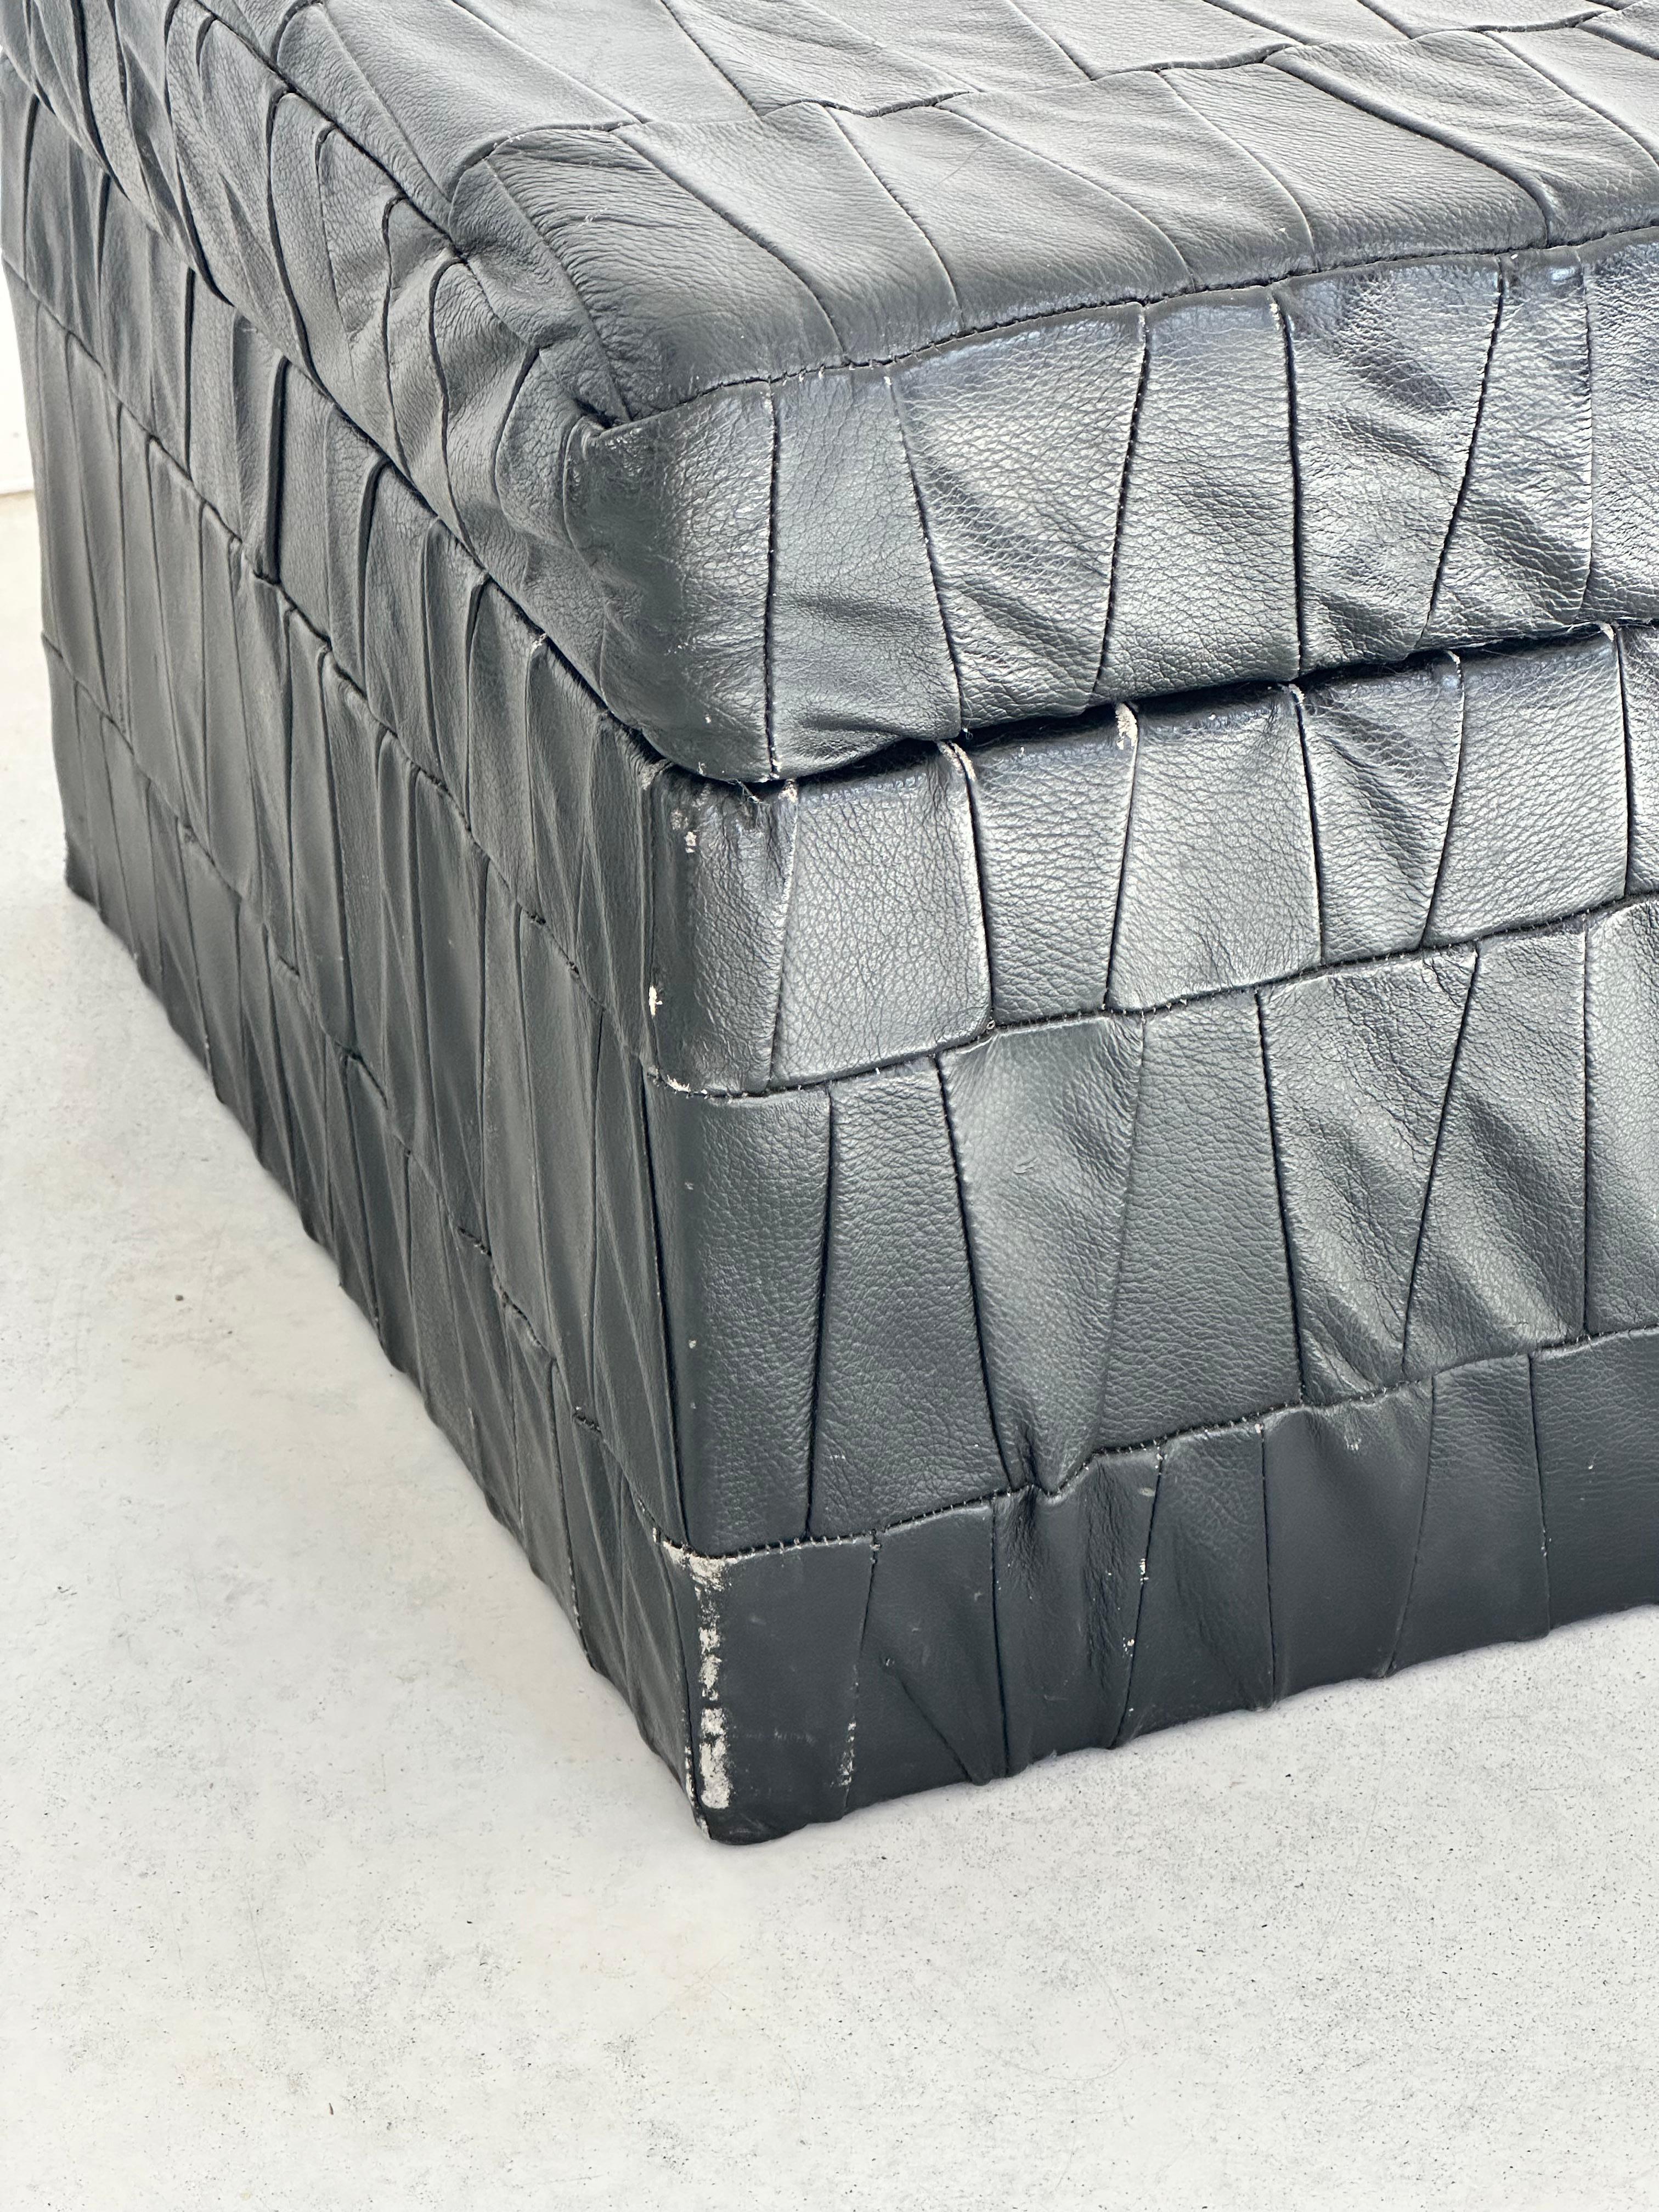 Swiss De Sede Design Black Leather Patchwork Storage Ottoman, Switzerland 1970s For Sale